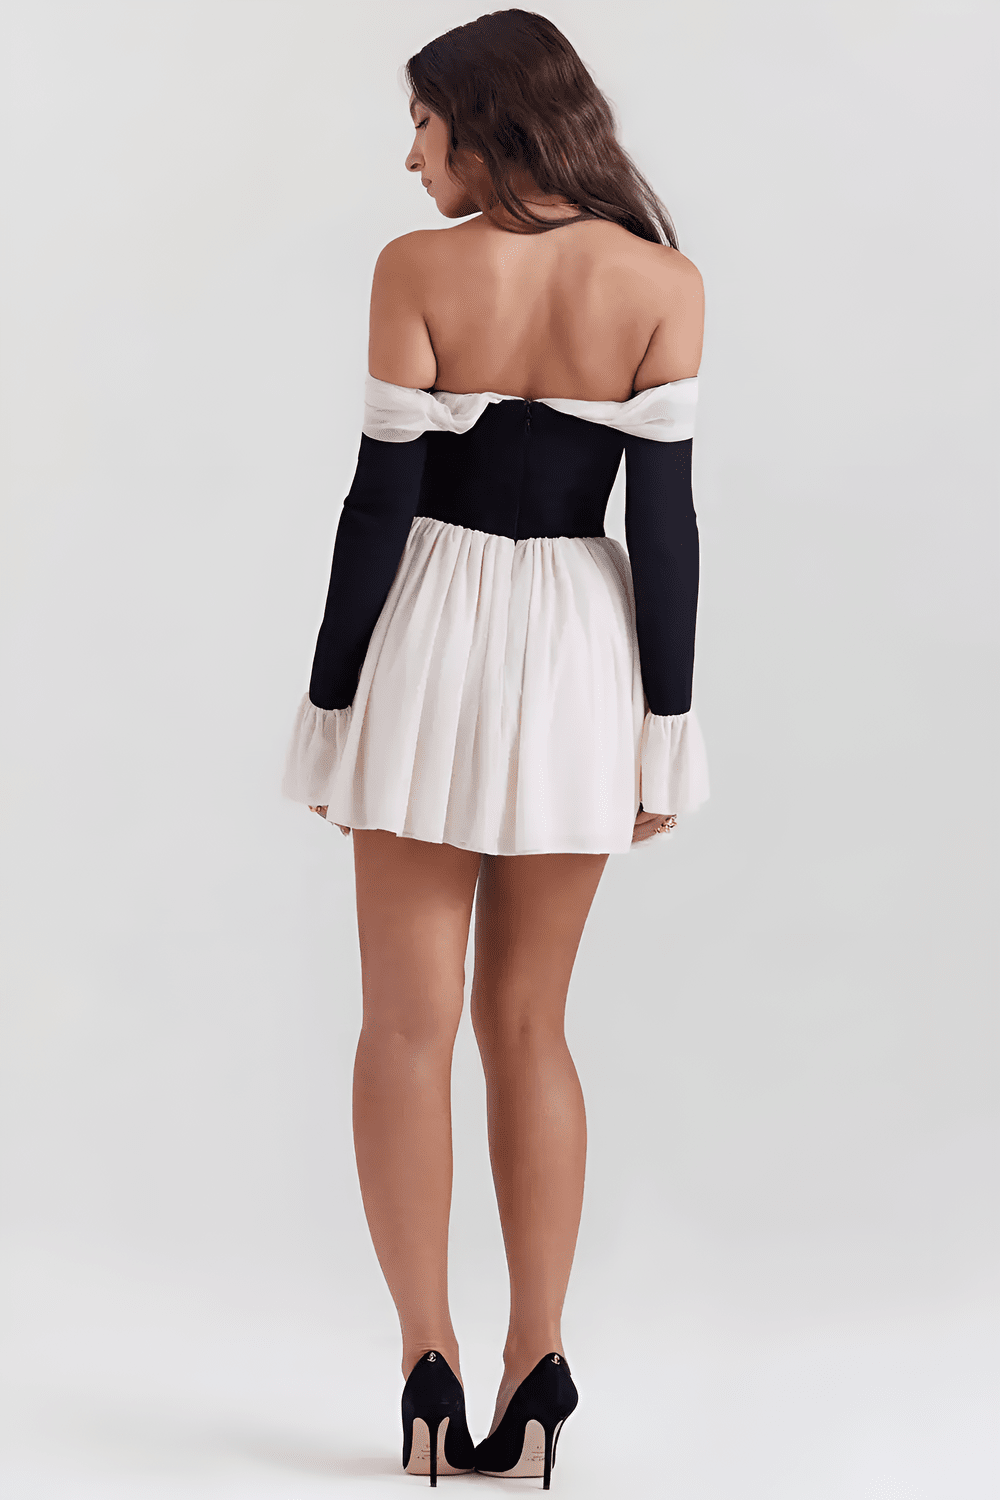 Yin & Yang Mini Dress | Atherea - Atherea